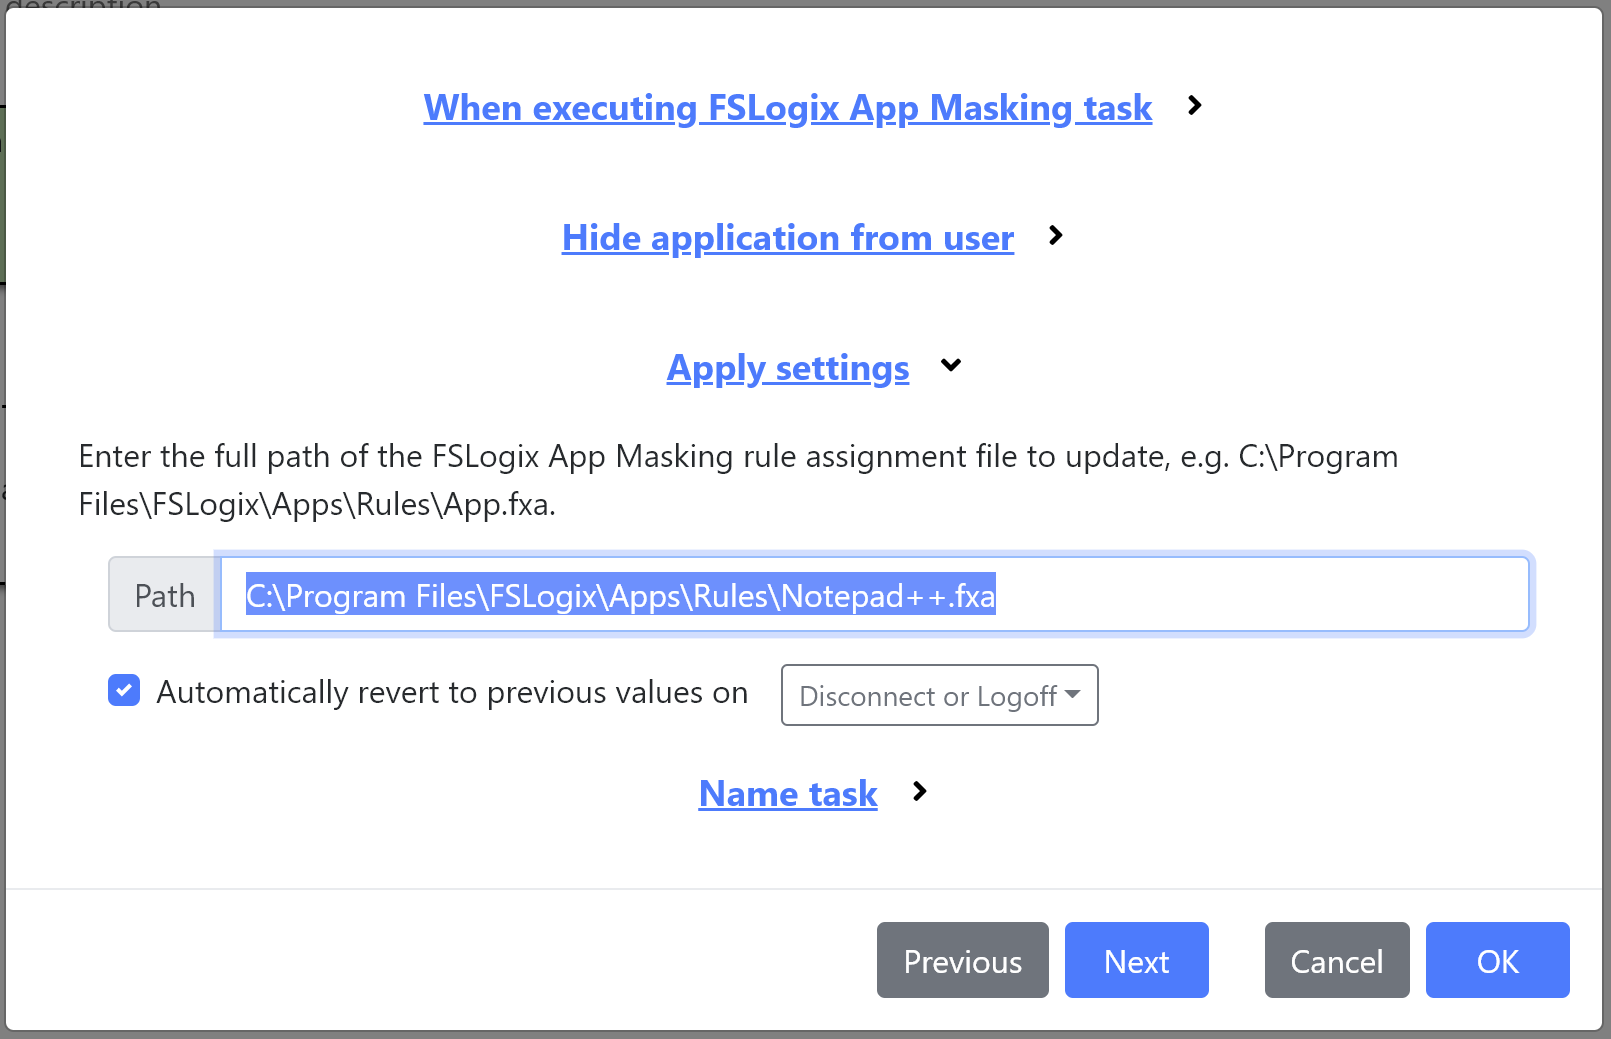 Configuring an FSLogix App Masking Task